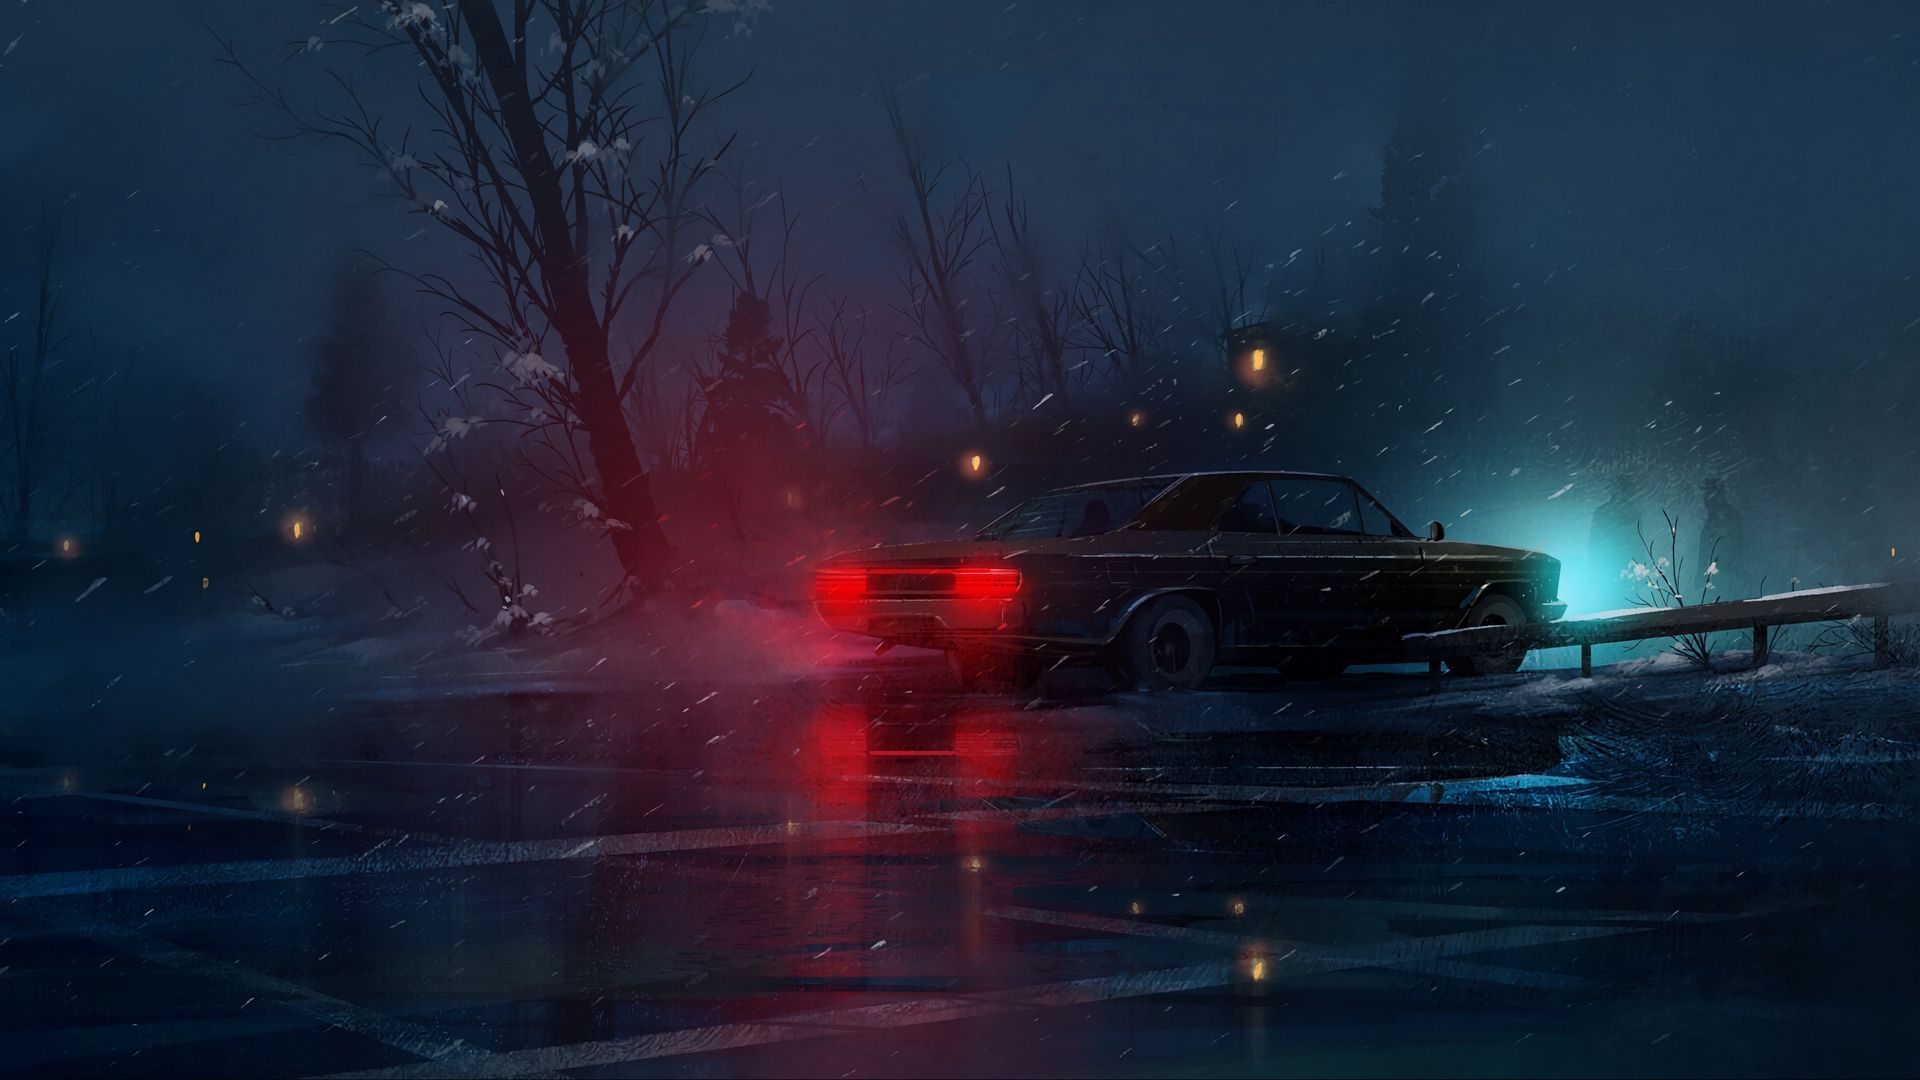 Download wallpaper 1920x1080 car, night, snow, light full hd, hdtv, fhd, 1080p HD background